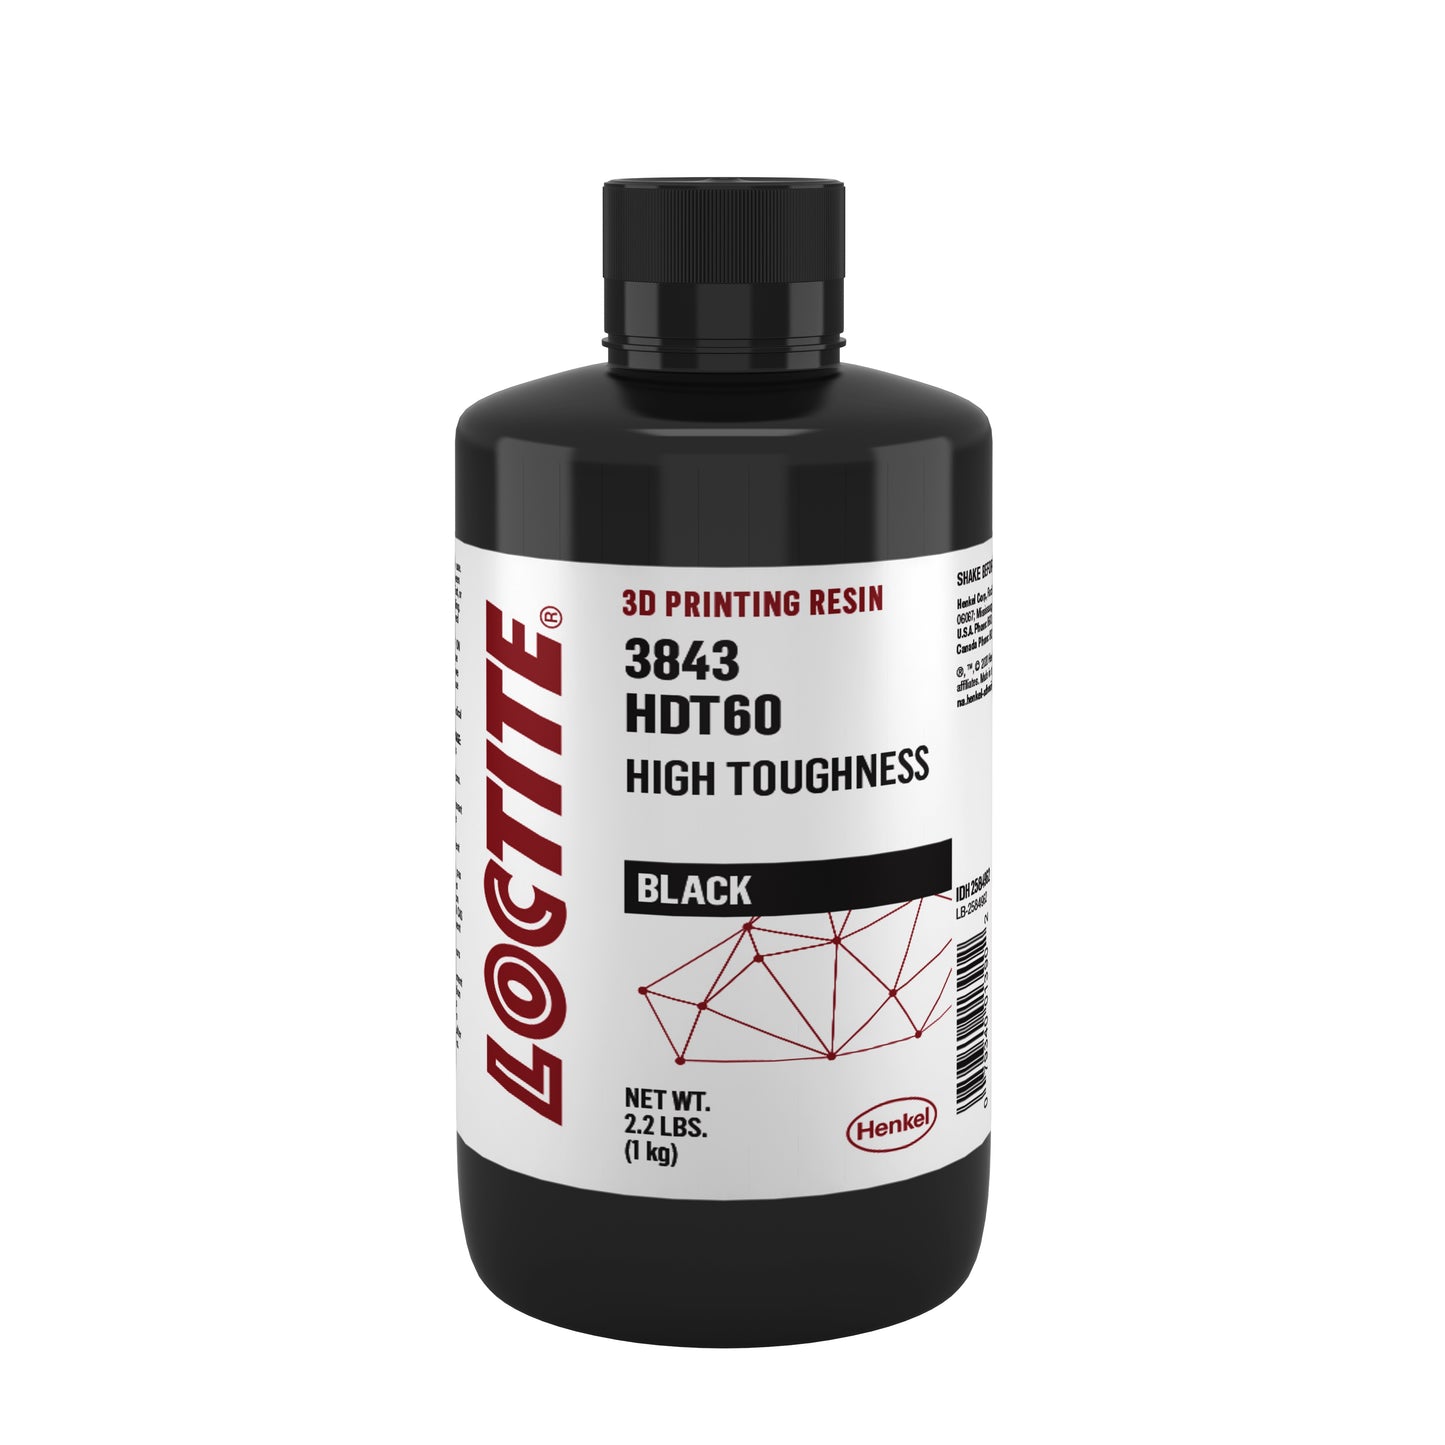 Loctite 3843, HDT60 High Toughness 3D Printing Resin Black 1kg - www.3dprintmonkey.co.uk - 1